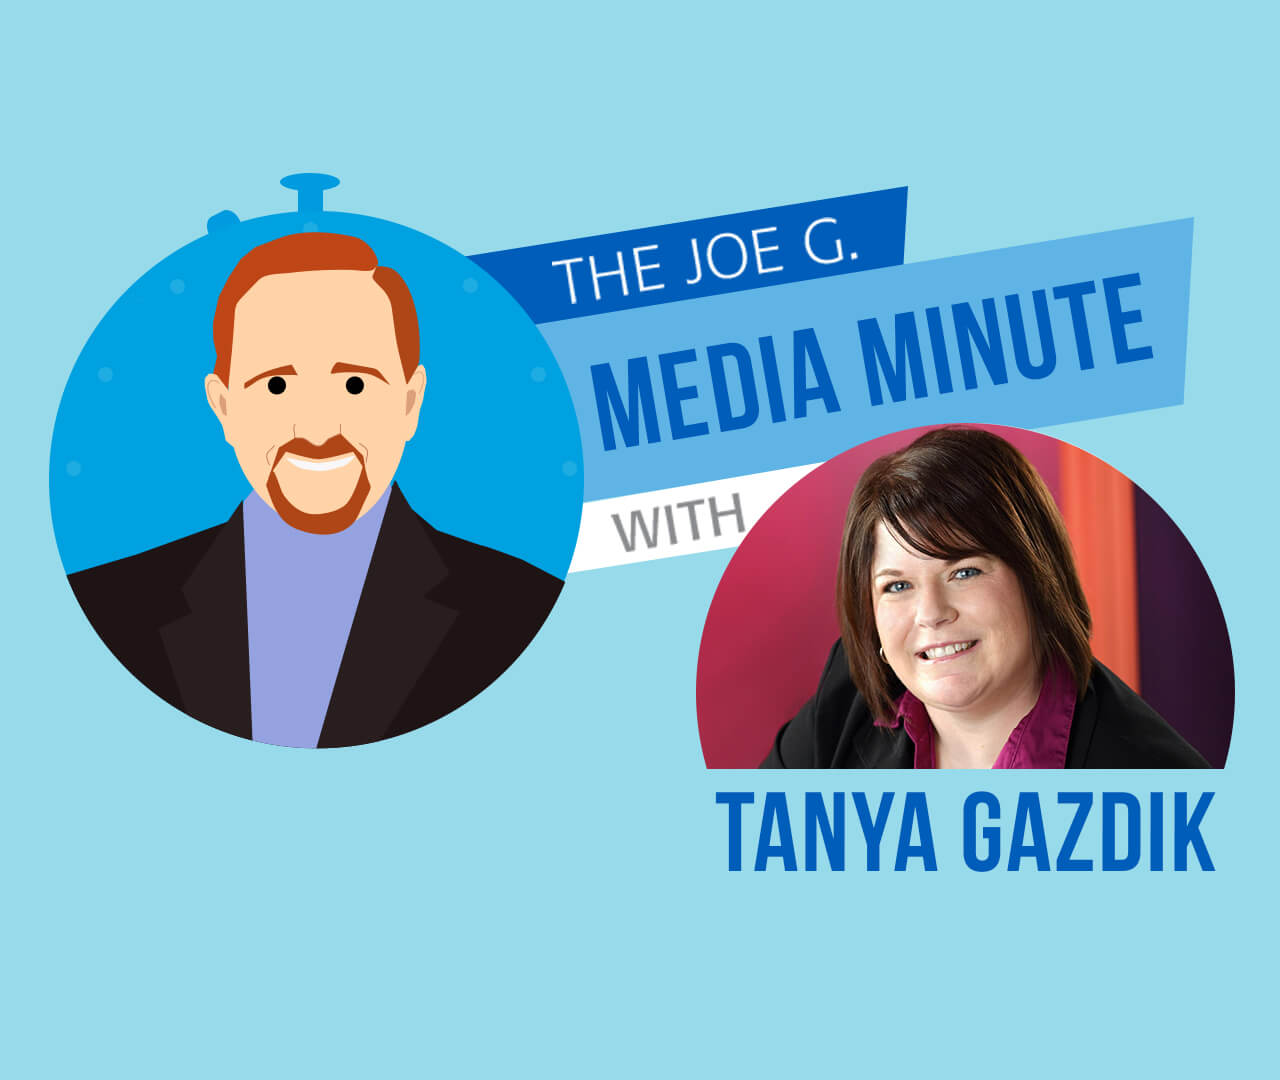 The Joe G. Media Minute with Tanya Gazdik